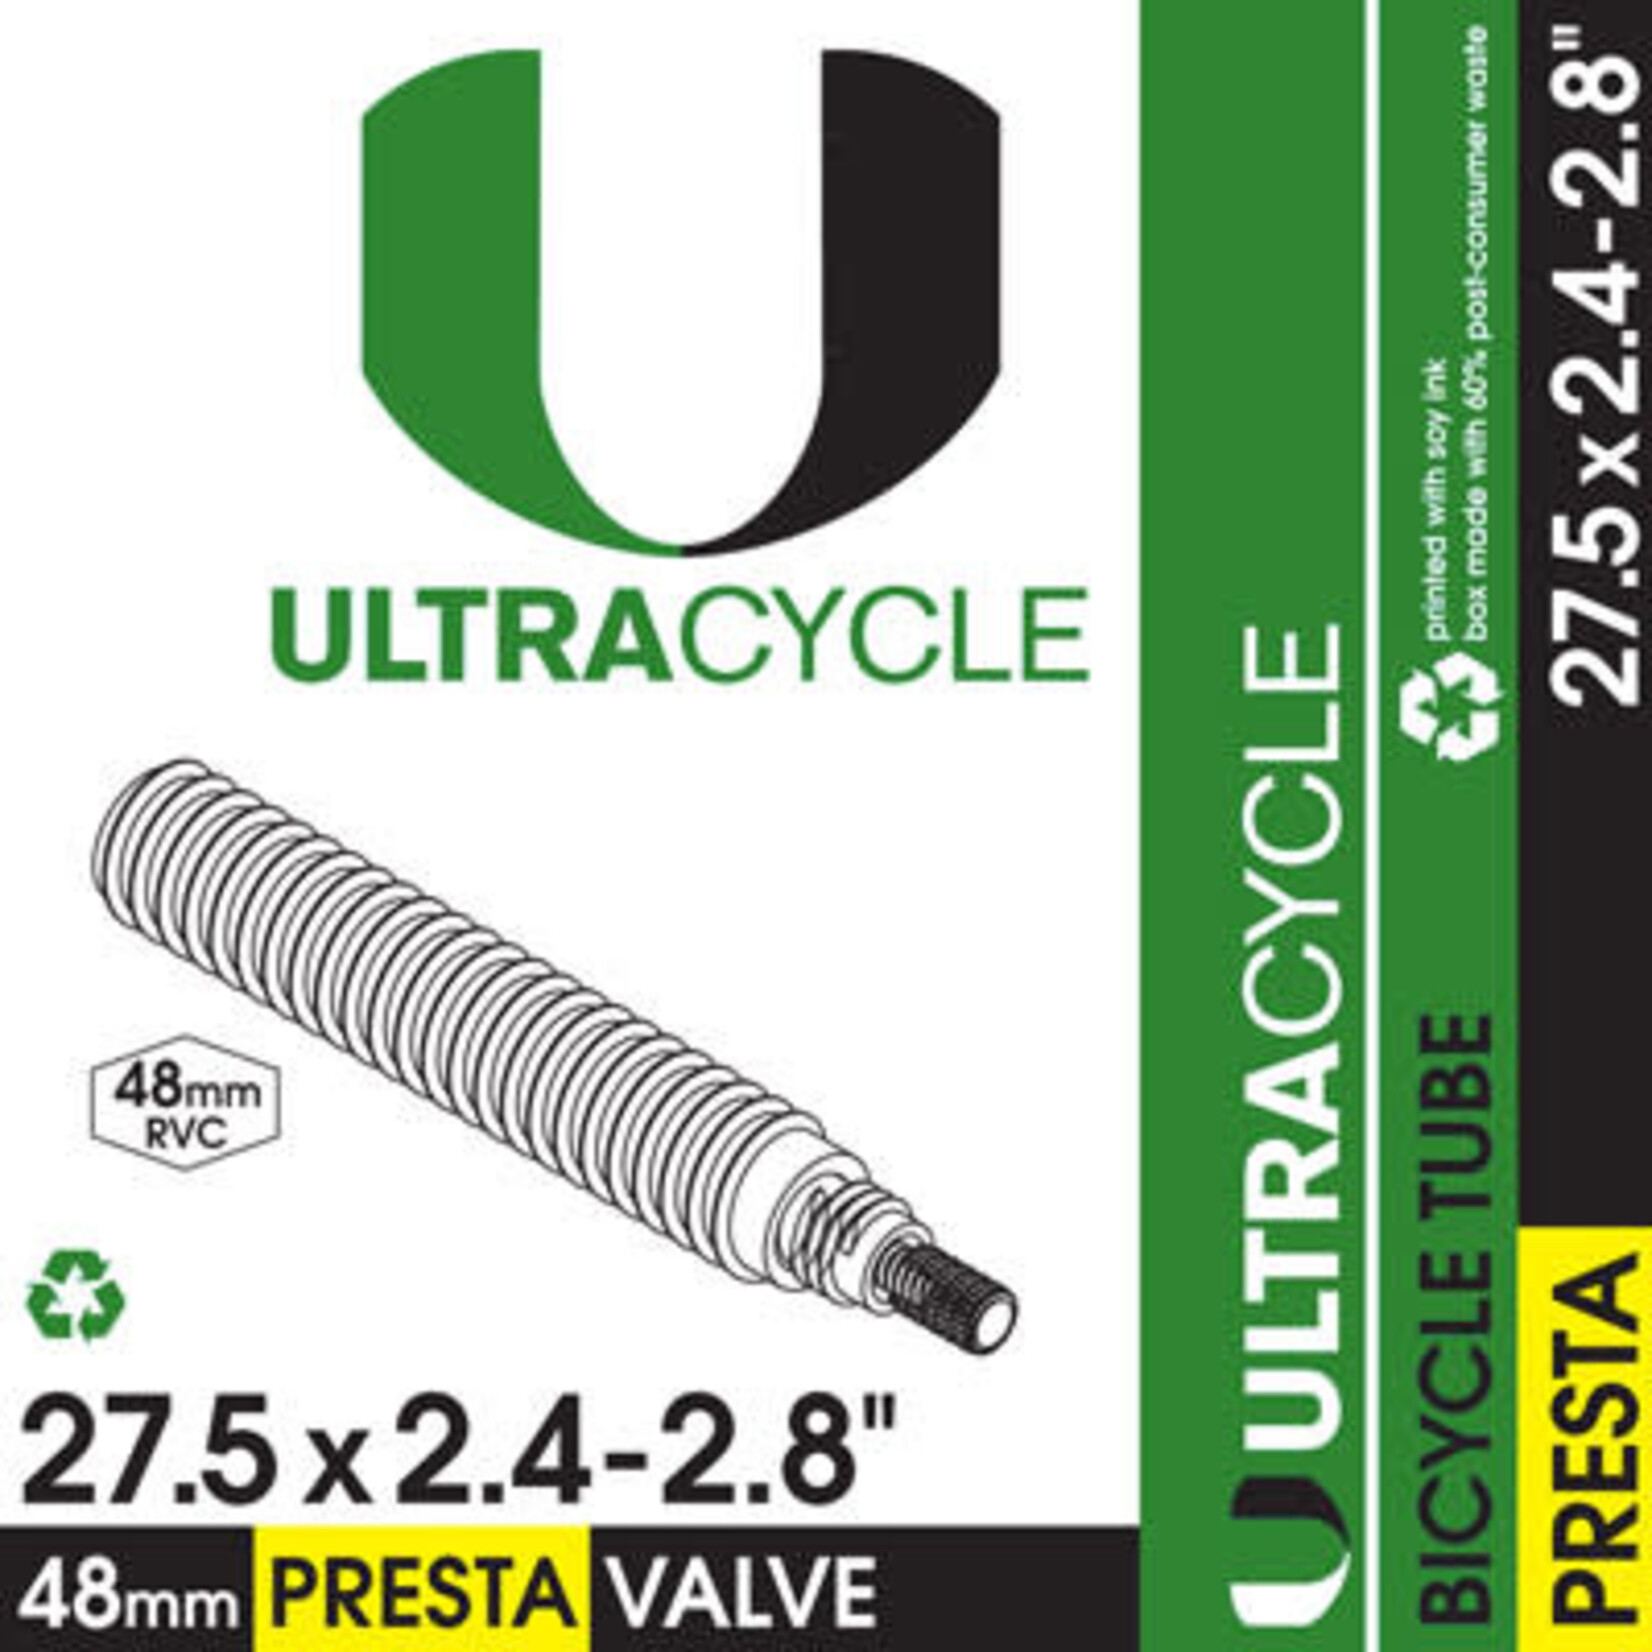 ULTRACYCLE UC 27.5X2.4-2.8 TUBE,48,PV,RVC 48mm STEM, 50 per case